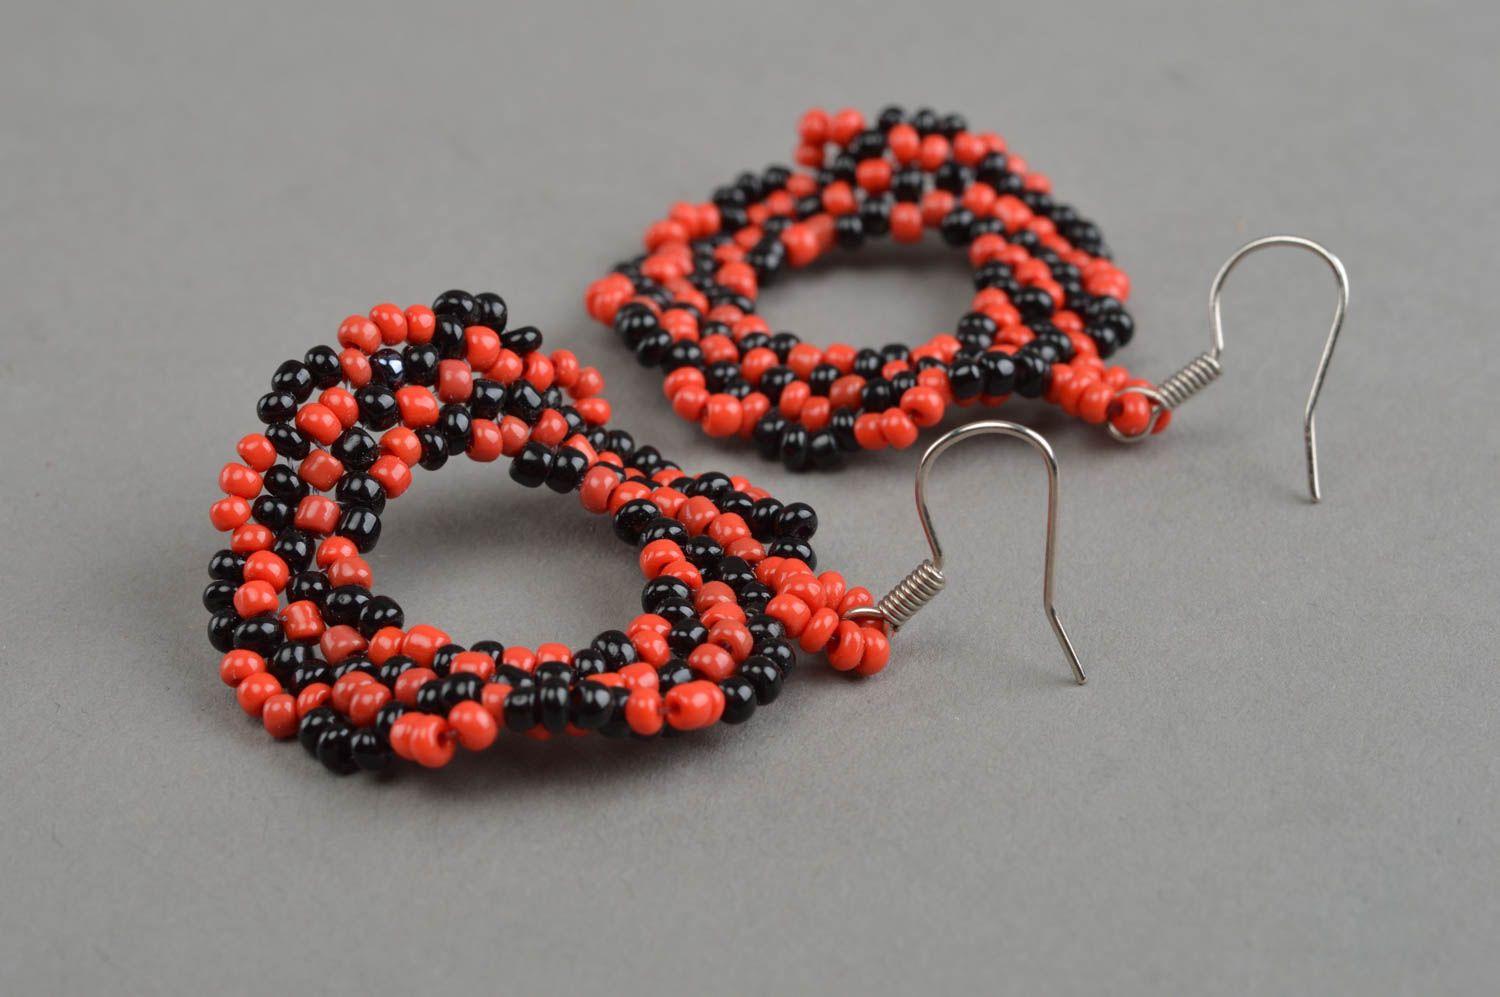 Unusual handcrafted beaded earrings evening jewelry designs bead weaving ideas photo 3